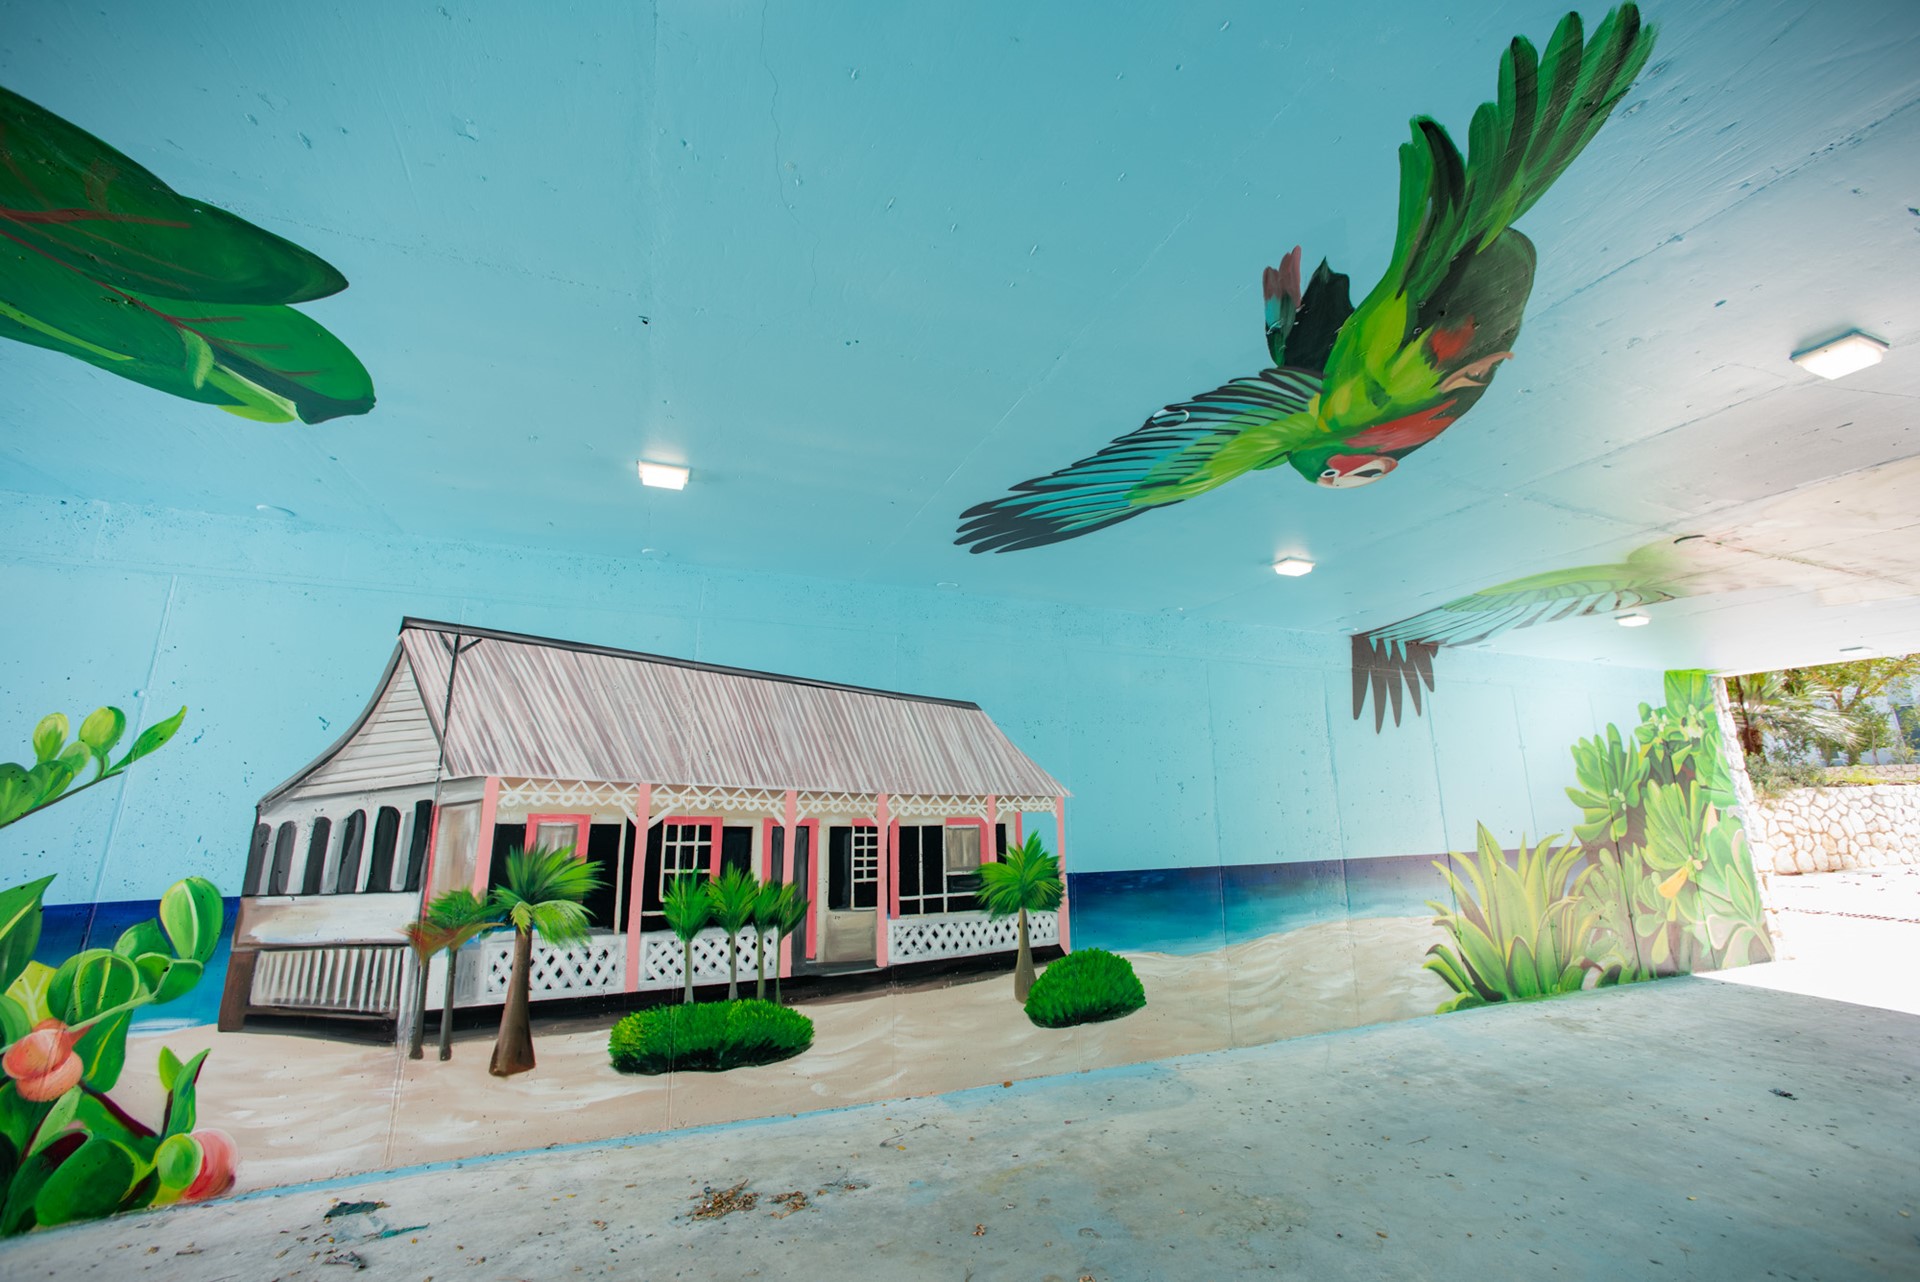 Pedestrian underpass murals in Camana Bay celebrate education and art